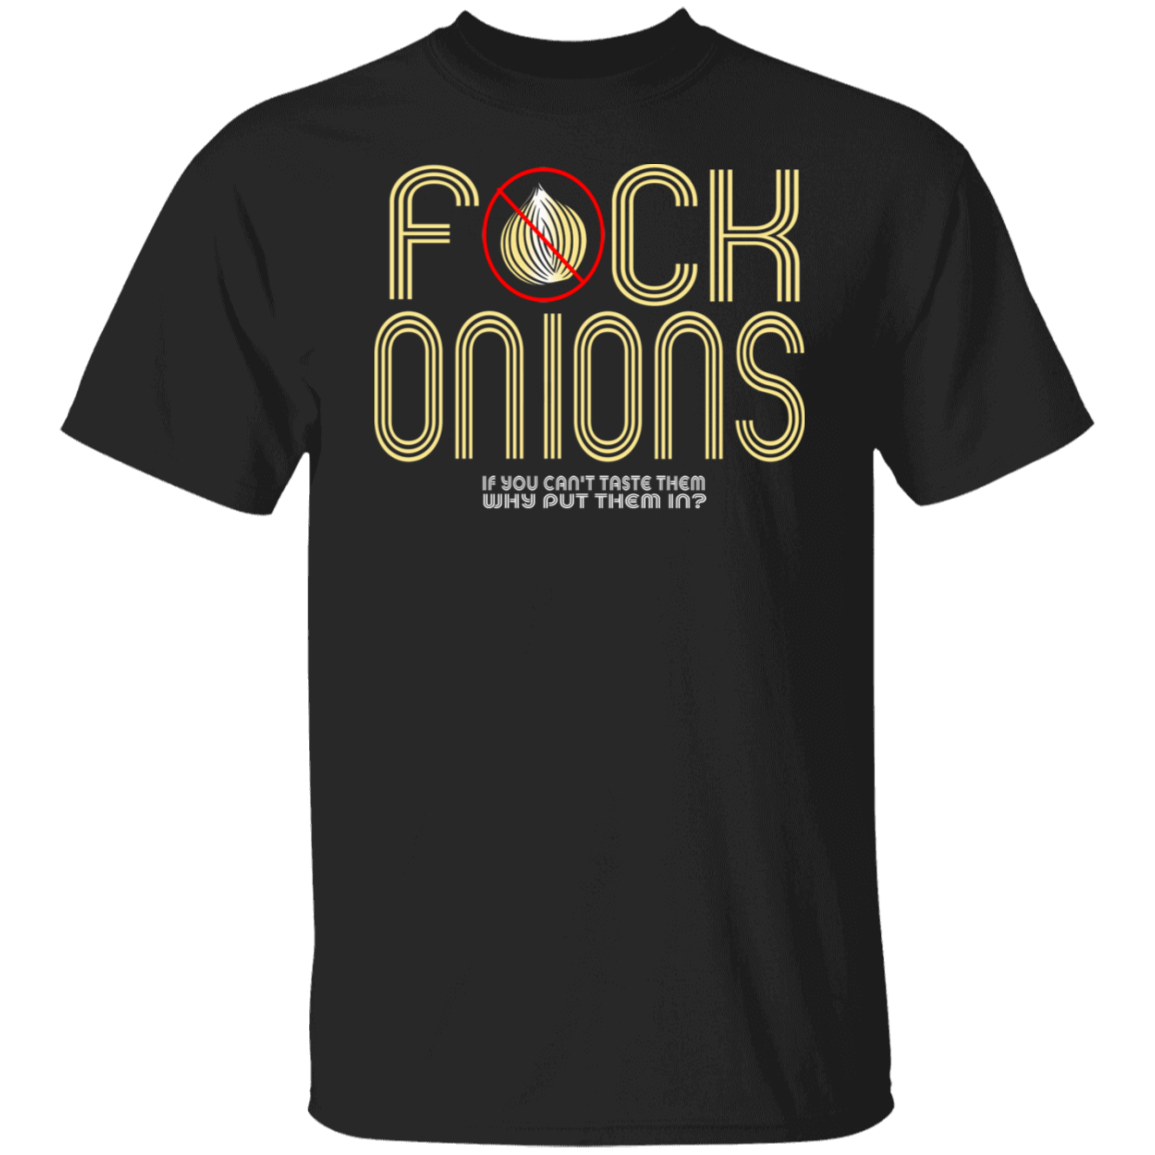 ArtichokeUSA Custom Design. Fuck Onions. 5.3 oz. T-Shirt